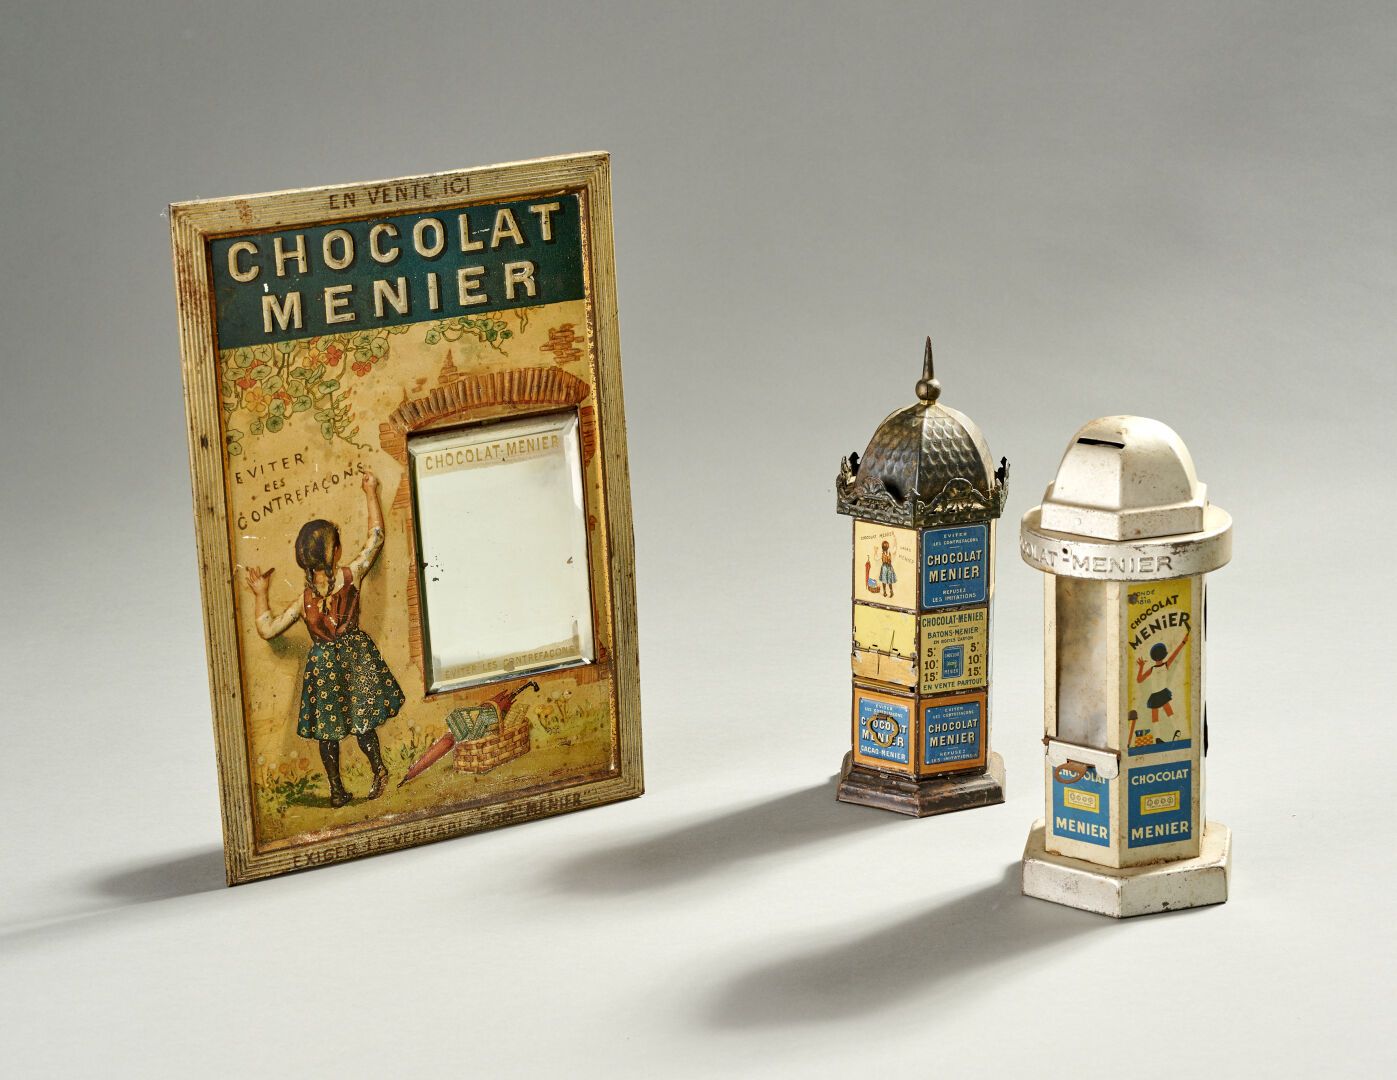 Null 巧克力麦尼尔

梅尼尔巧克力 "平版印刷金属板与镜子。

法国，约1930年。

38 x 26,5 cm

生锈，磨损。